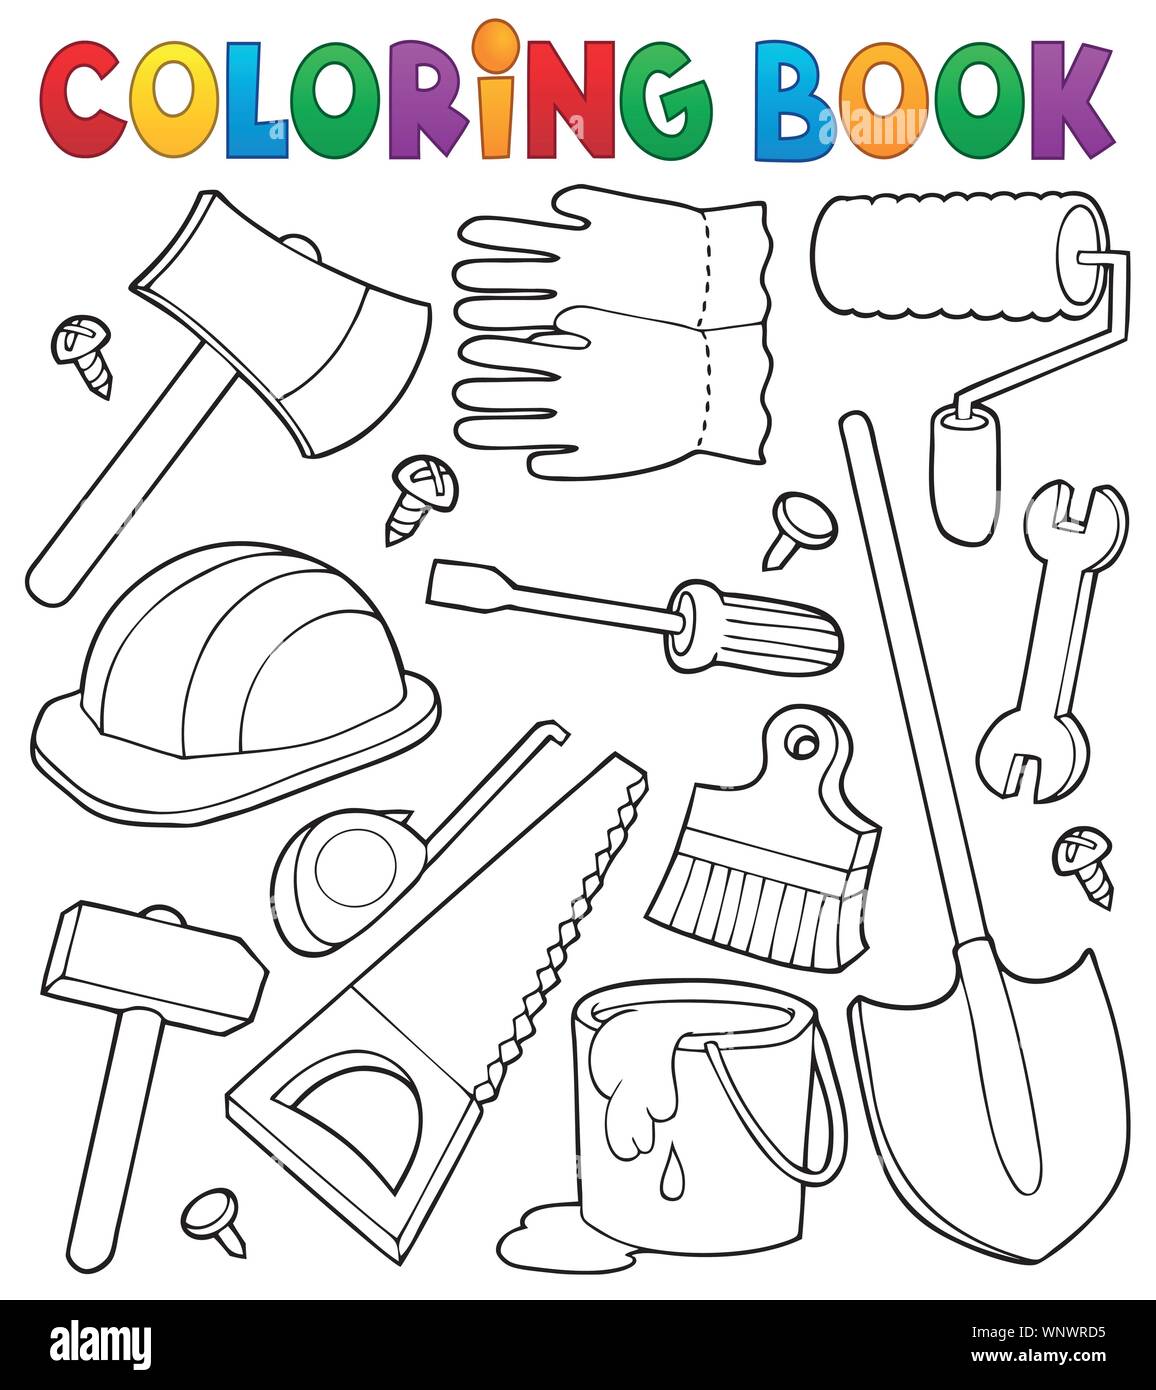 https://c8.alamy.com/comp/WNWRD5/coloring-book-tools-theme-1-WNWRD5.jpg